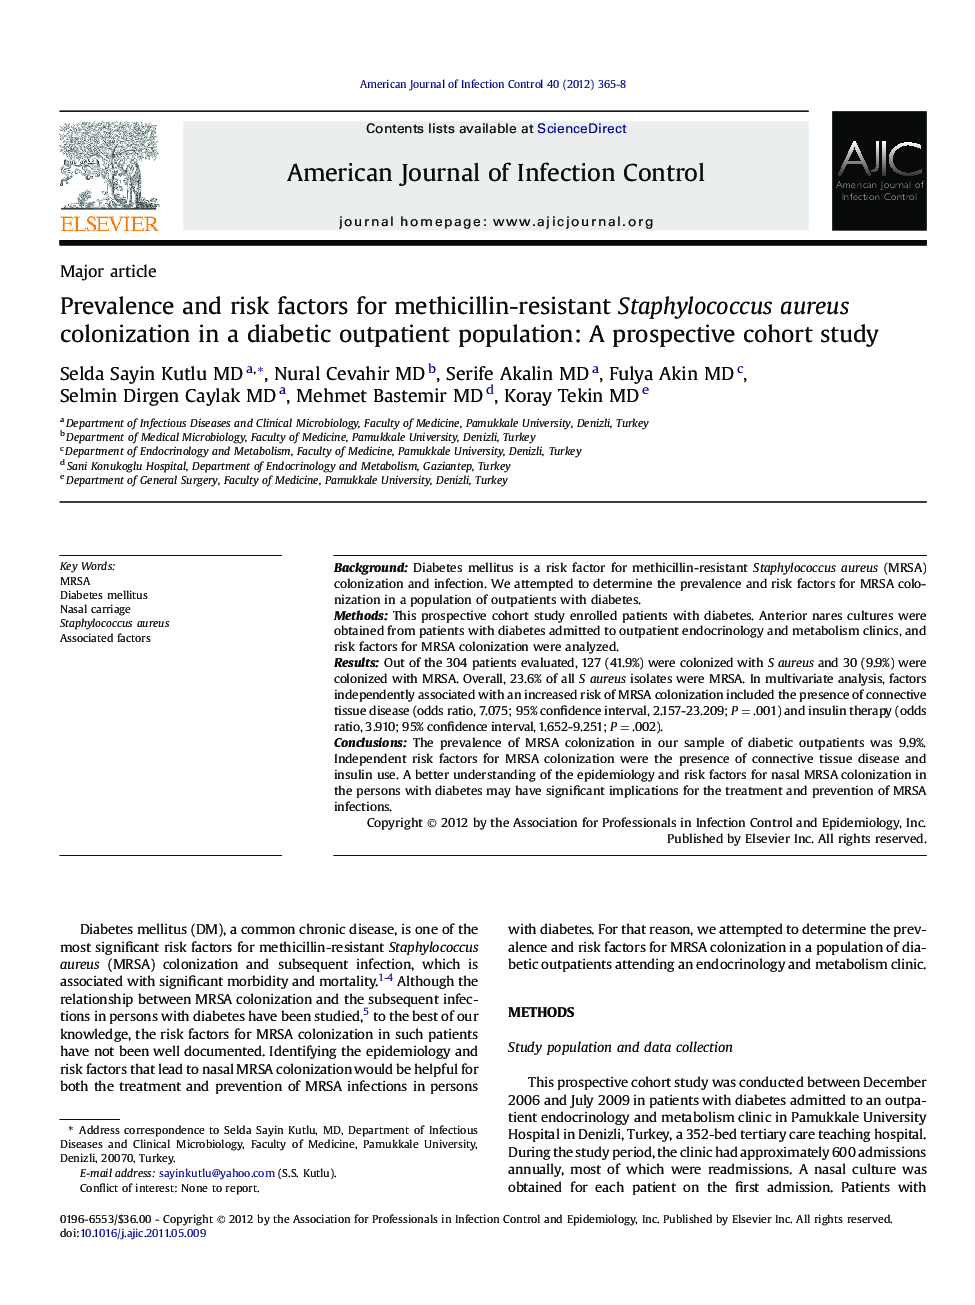 Prevalence and risk factors for methicillin-resistant Staphylococcus aureus colonization in a diabetic outpatient population: A prospective cohort study 